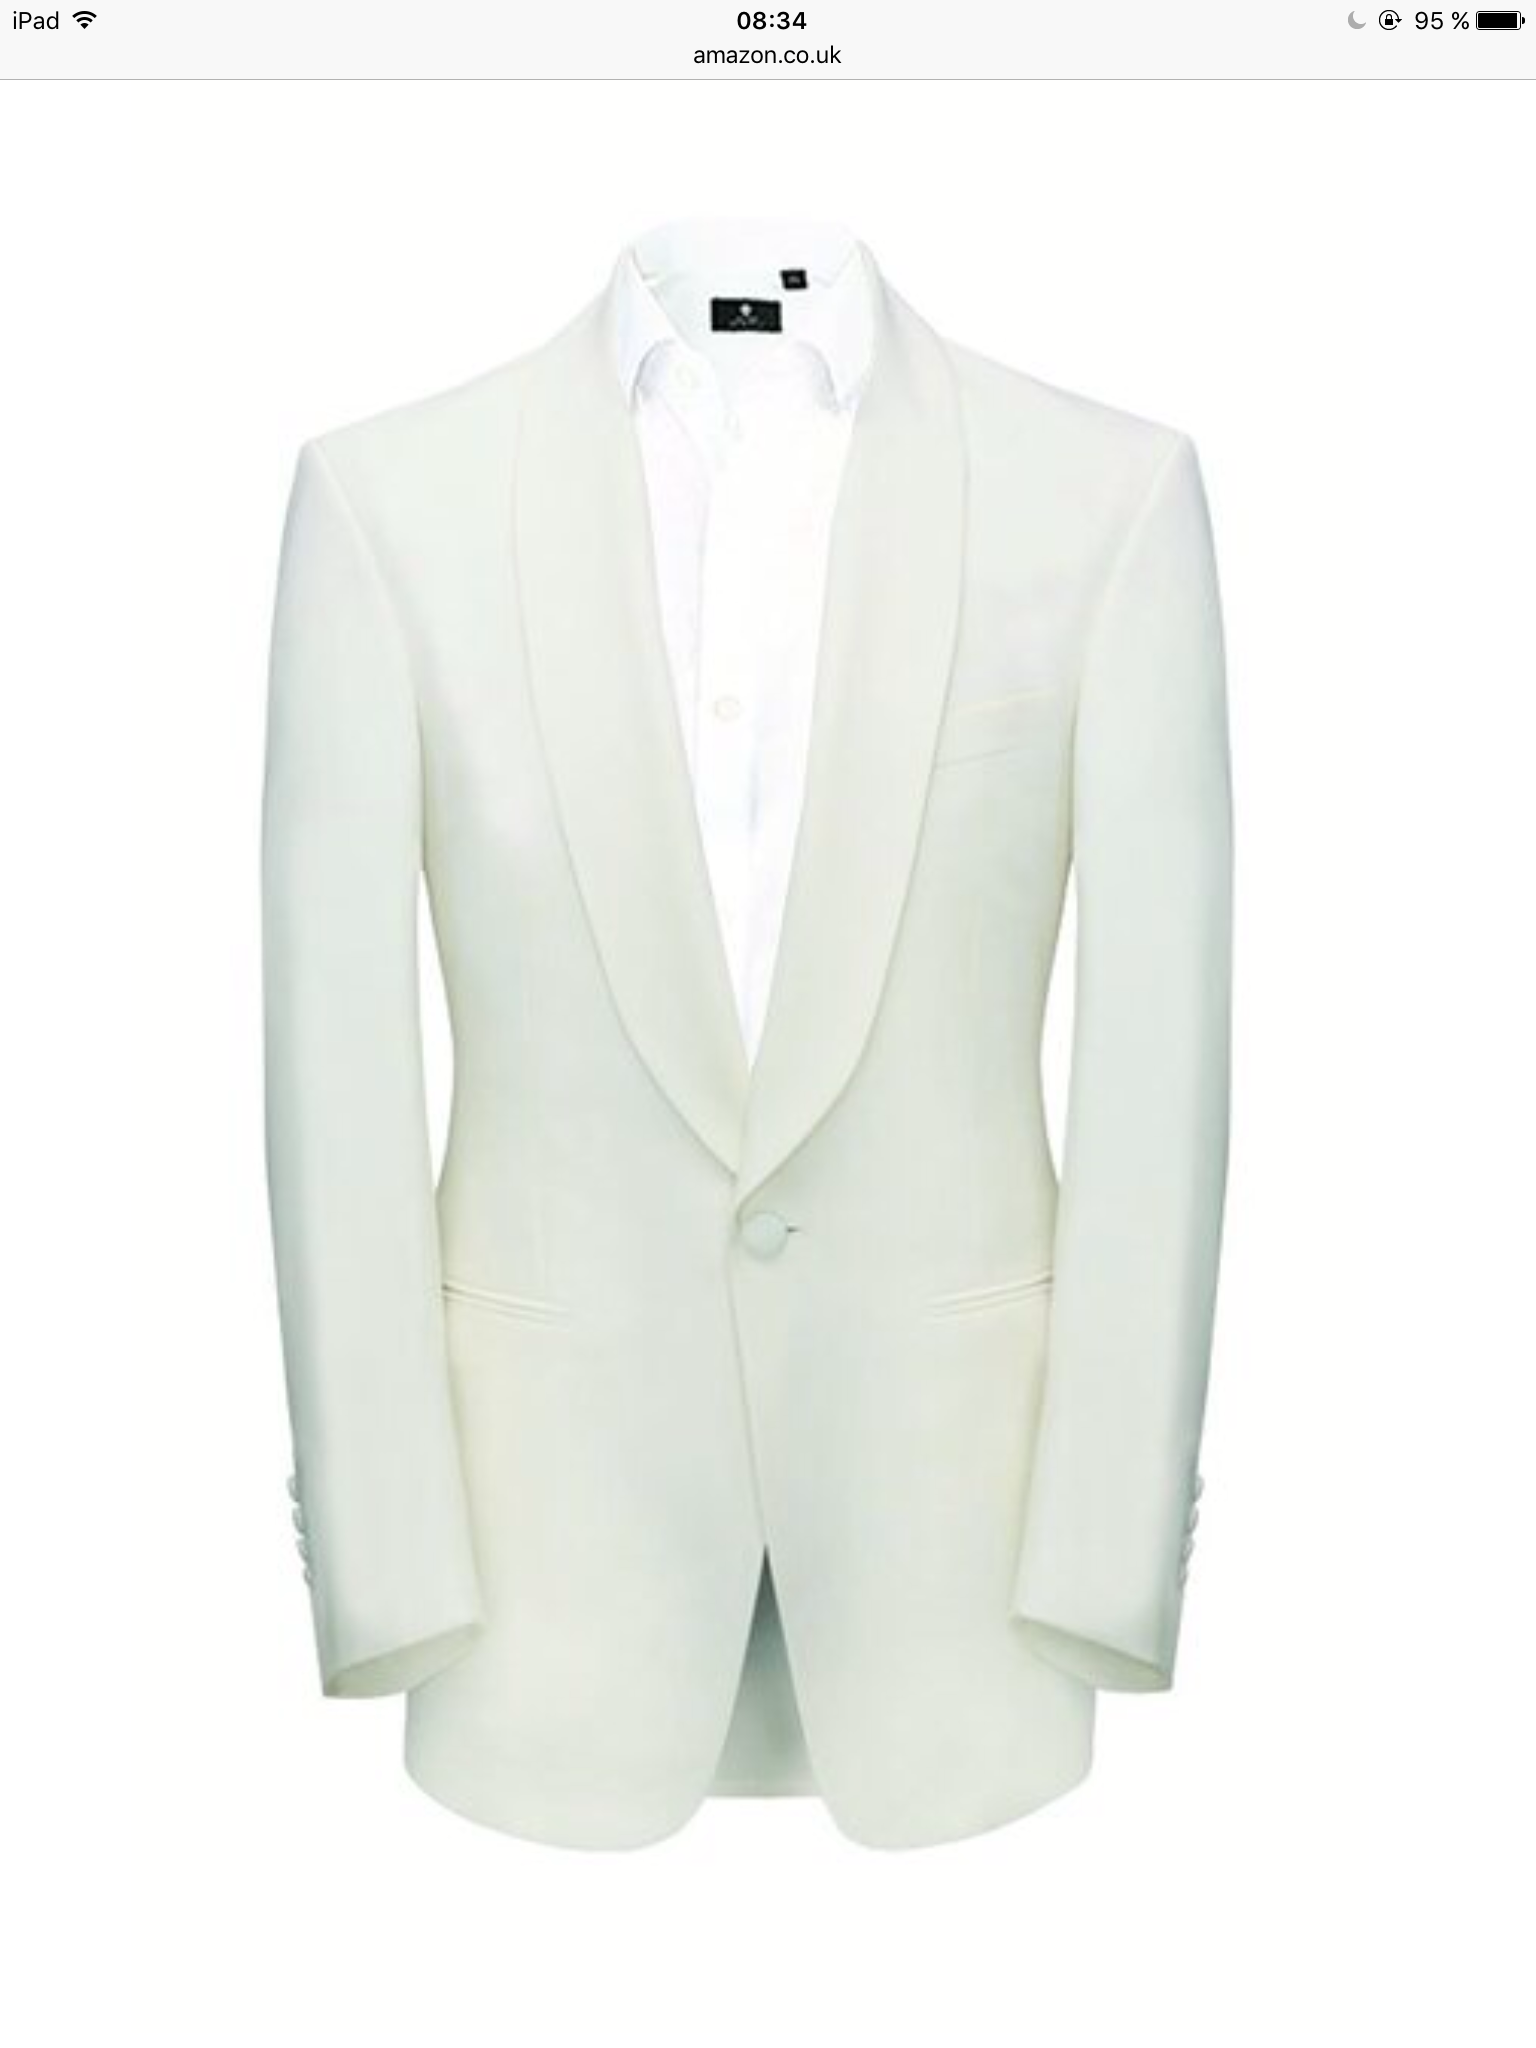 White Dinner Jacket/Tuxedo Jacket for Houston wedding | Styleforum